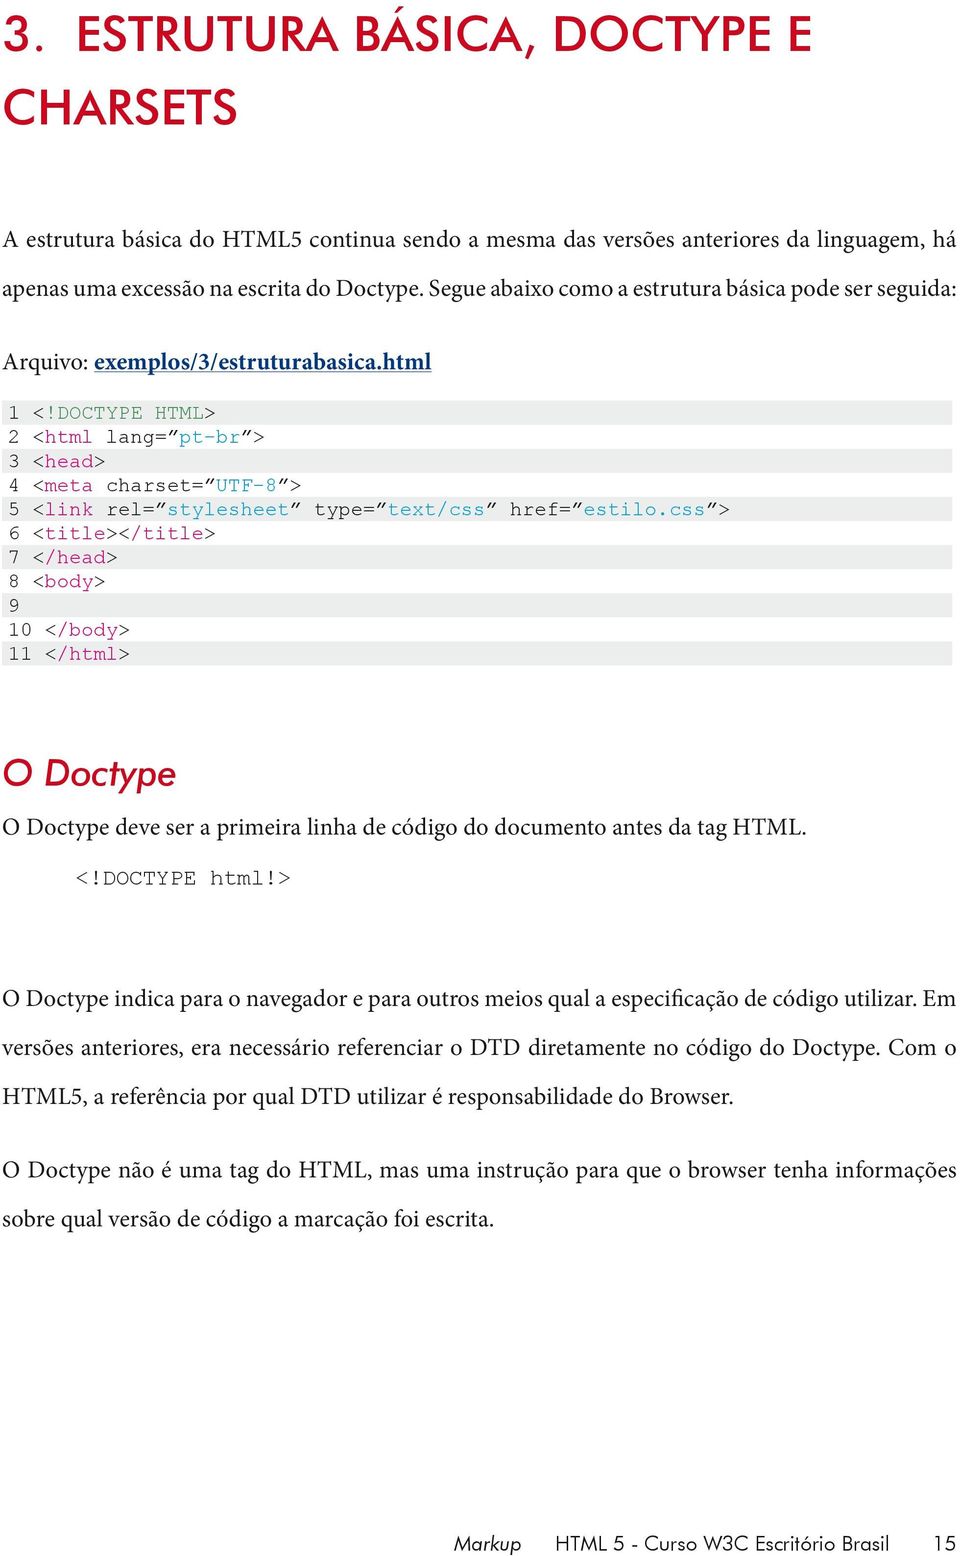 DOCTYPE HTML> 2 <html lang= pt-br > 3 <head> 4 <meta charset= UTF-8 > 5 <link rel= stylesheet type= text/css href= estilo.